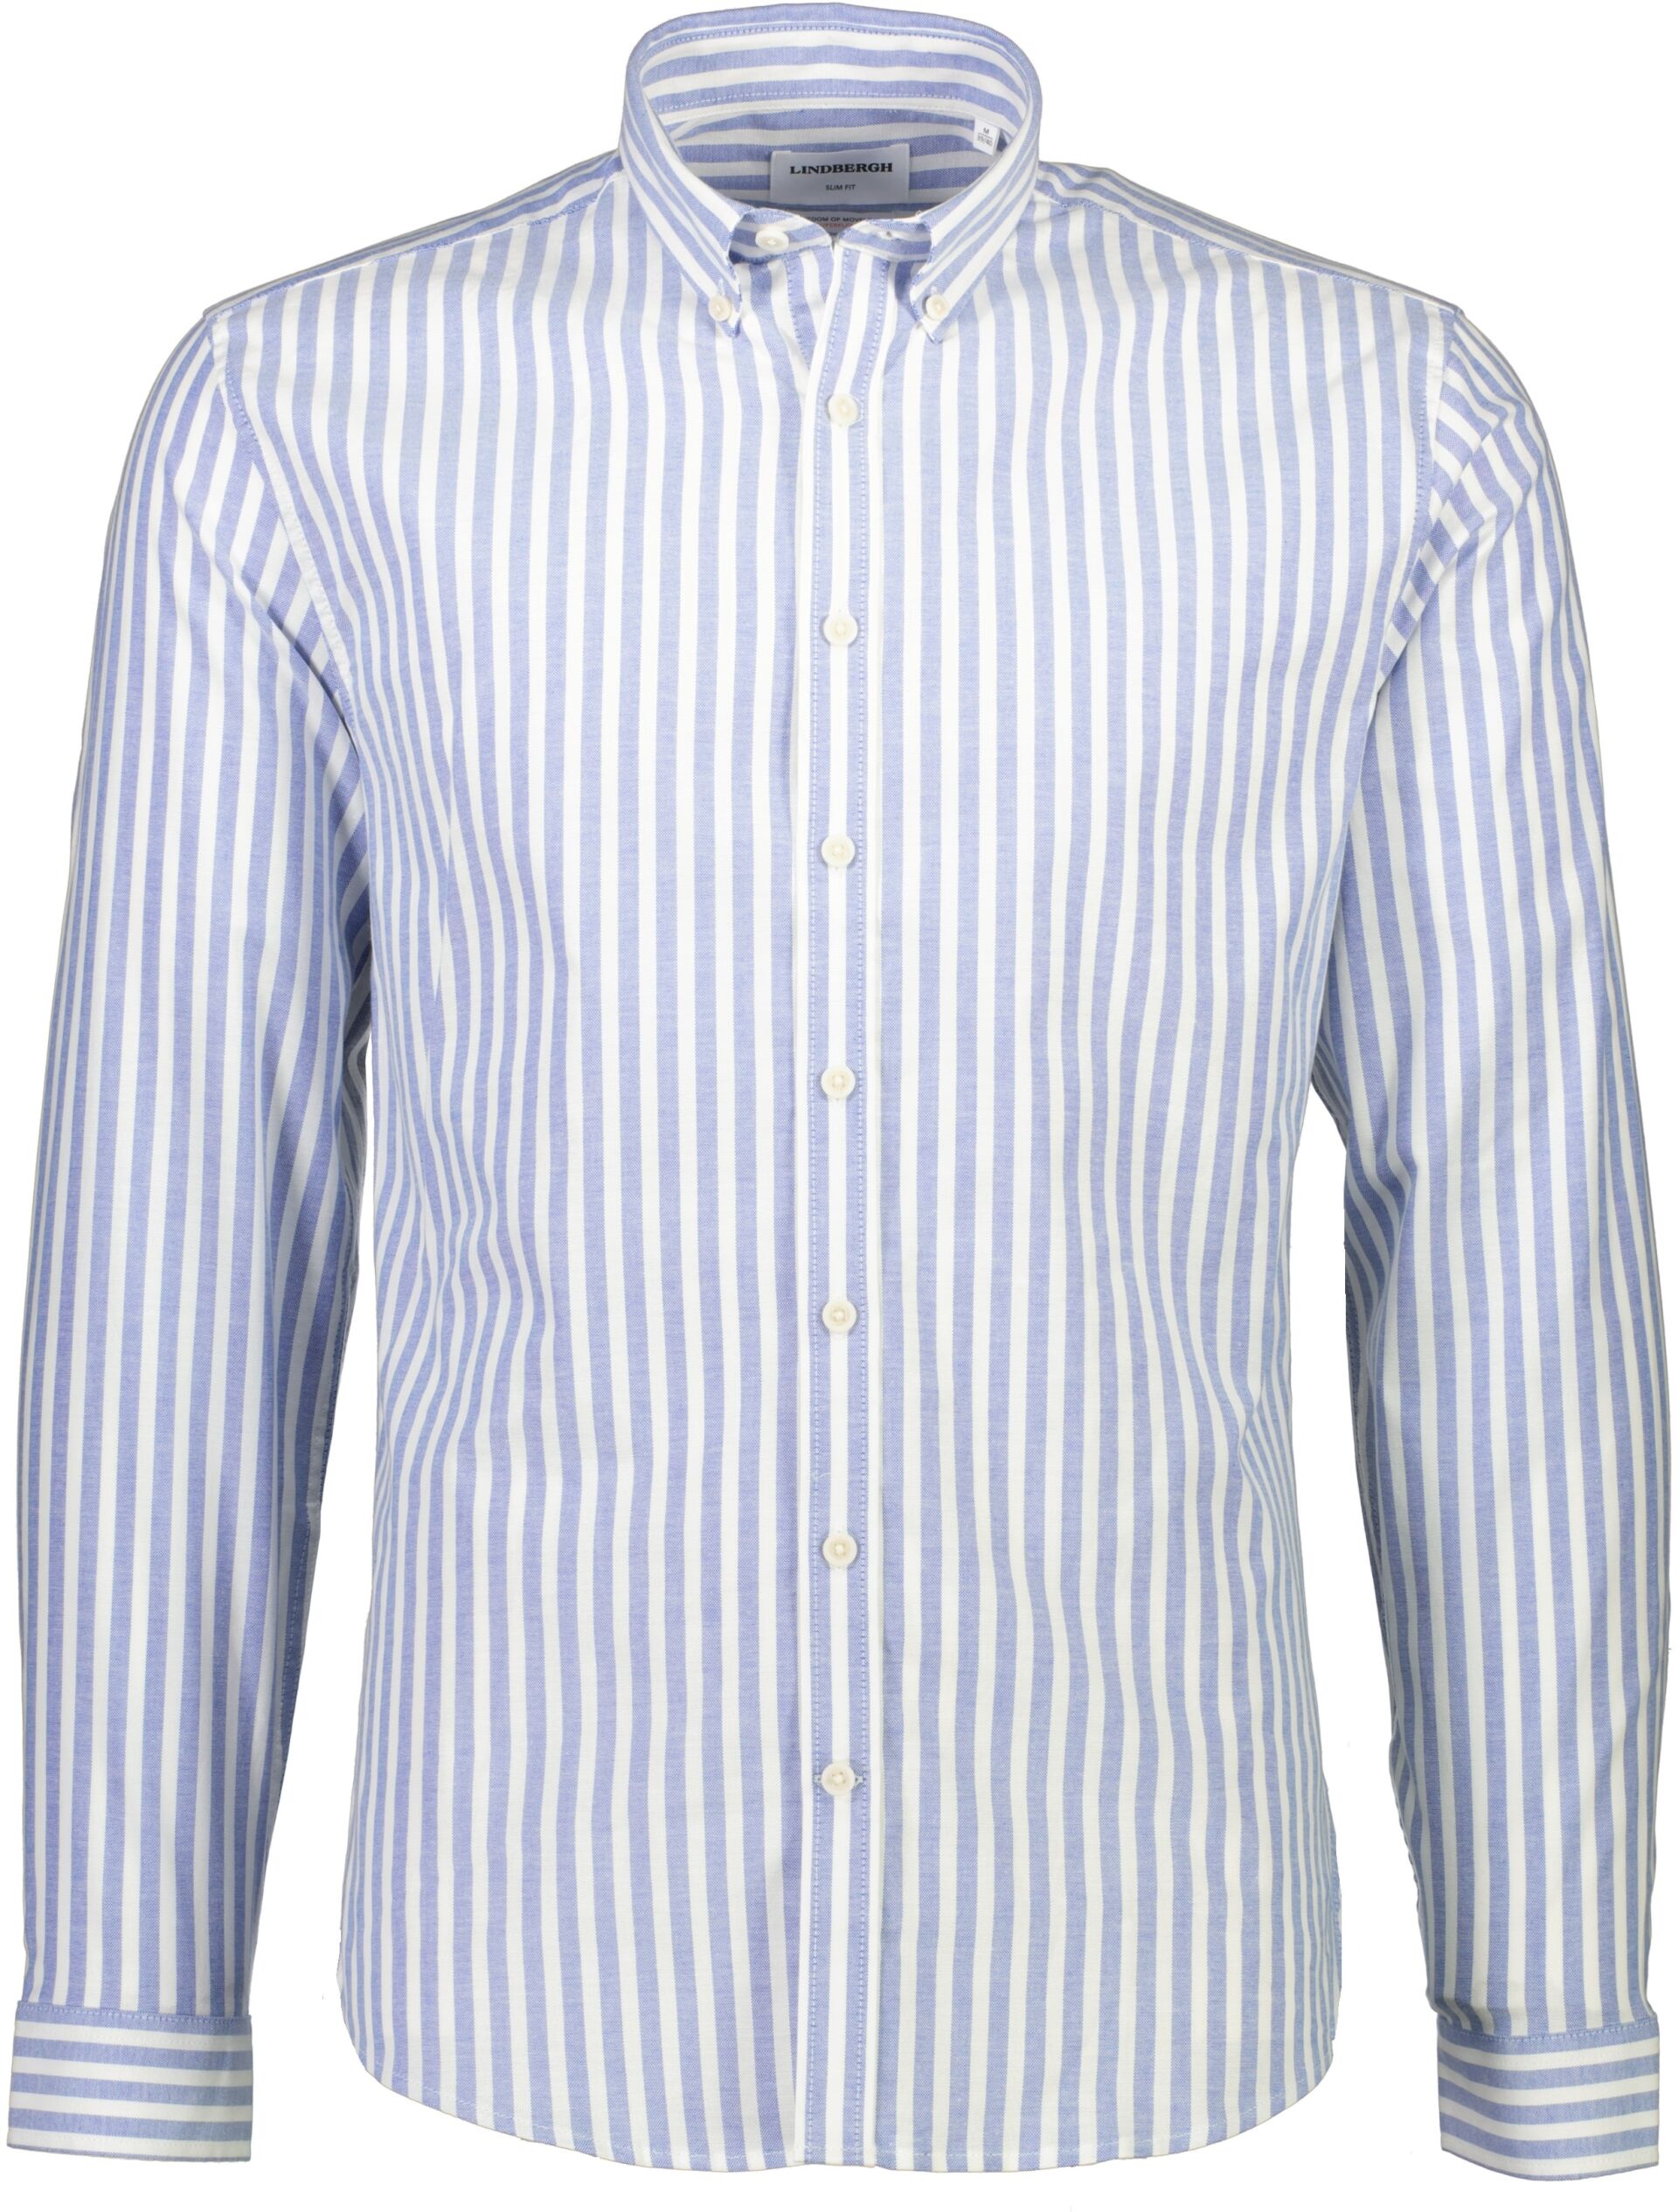 Oxford shirt Oxford shirt Blue 30-203536